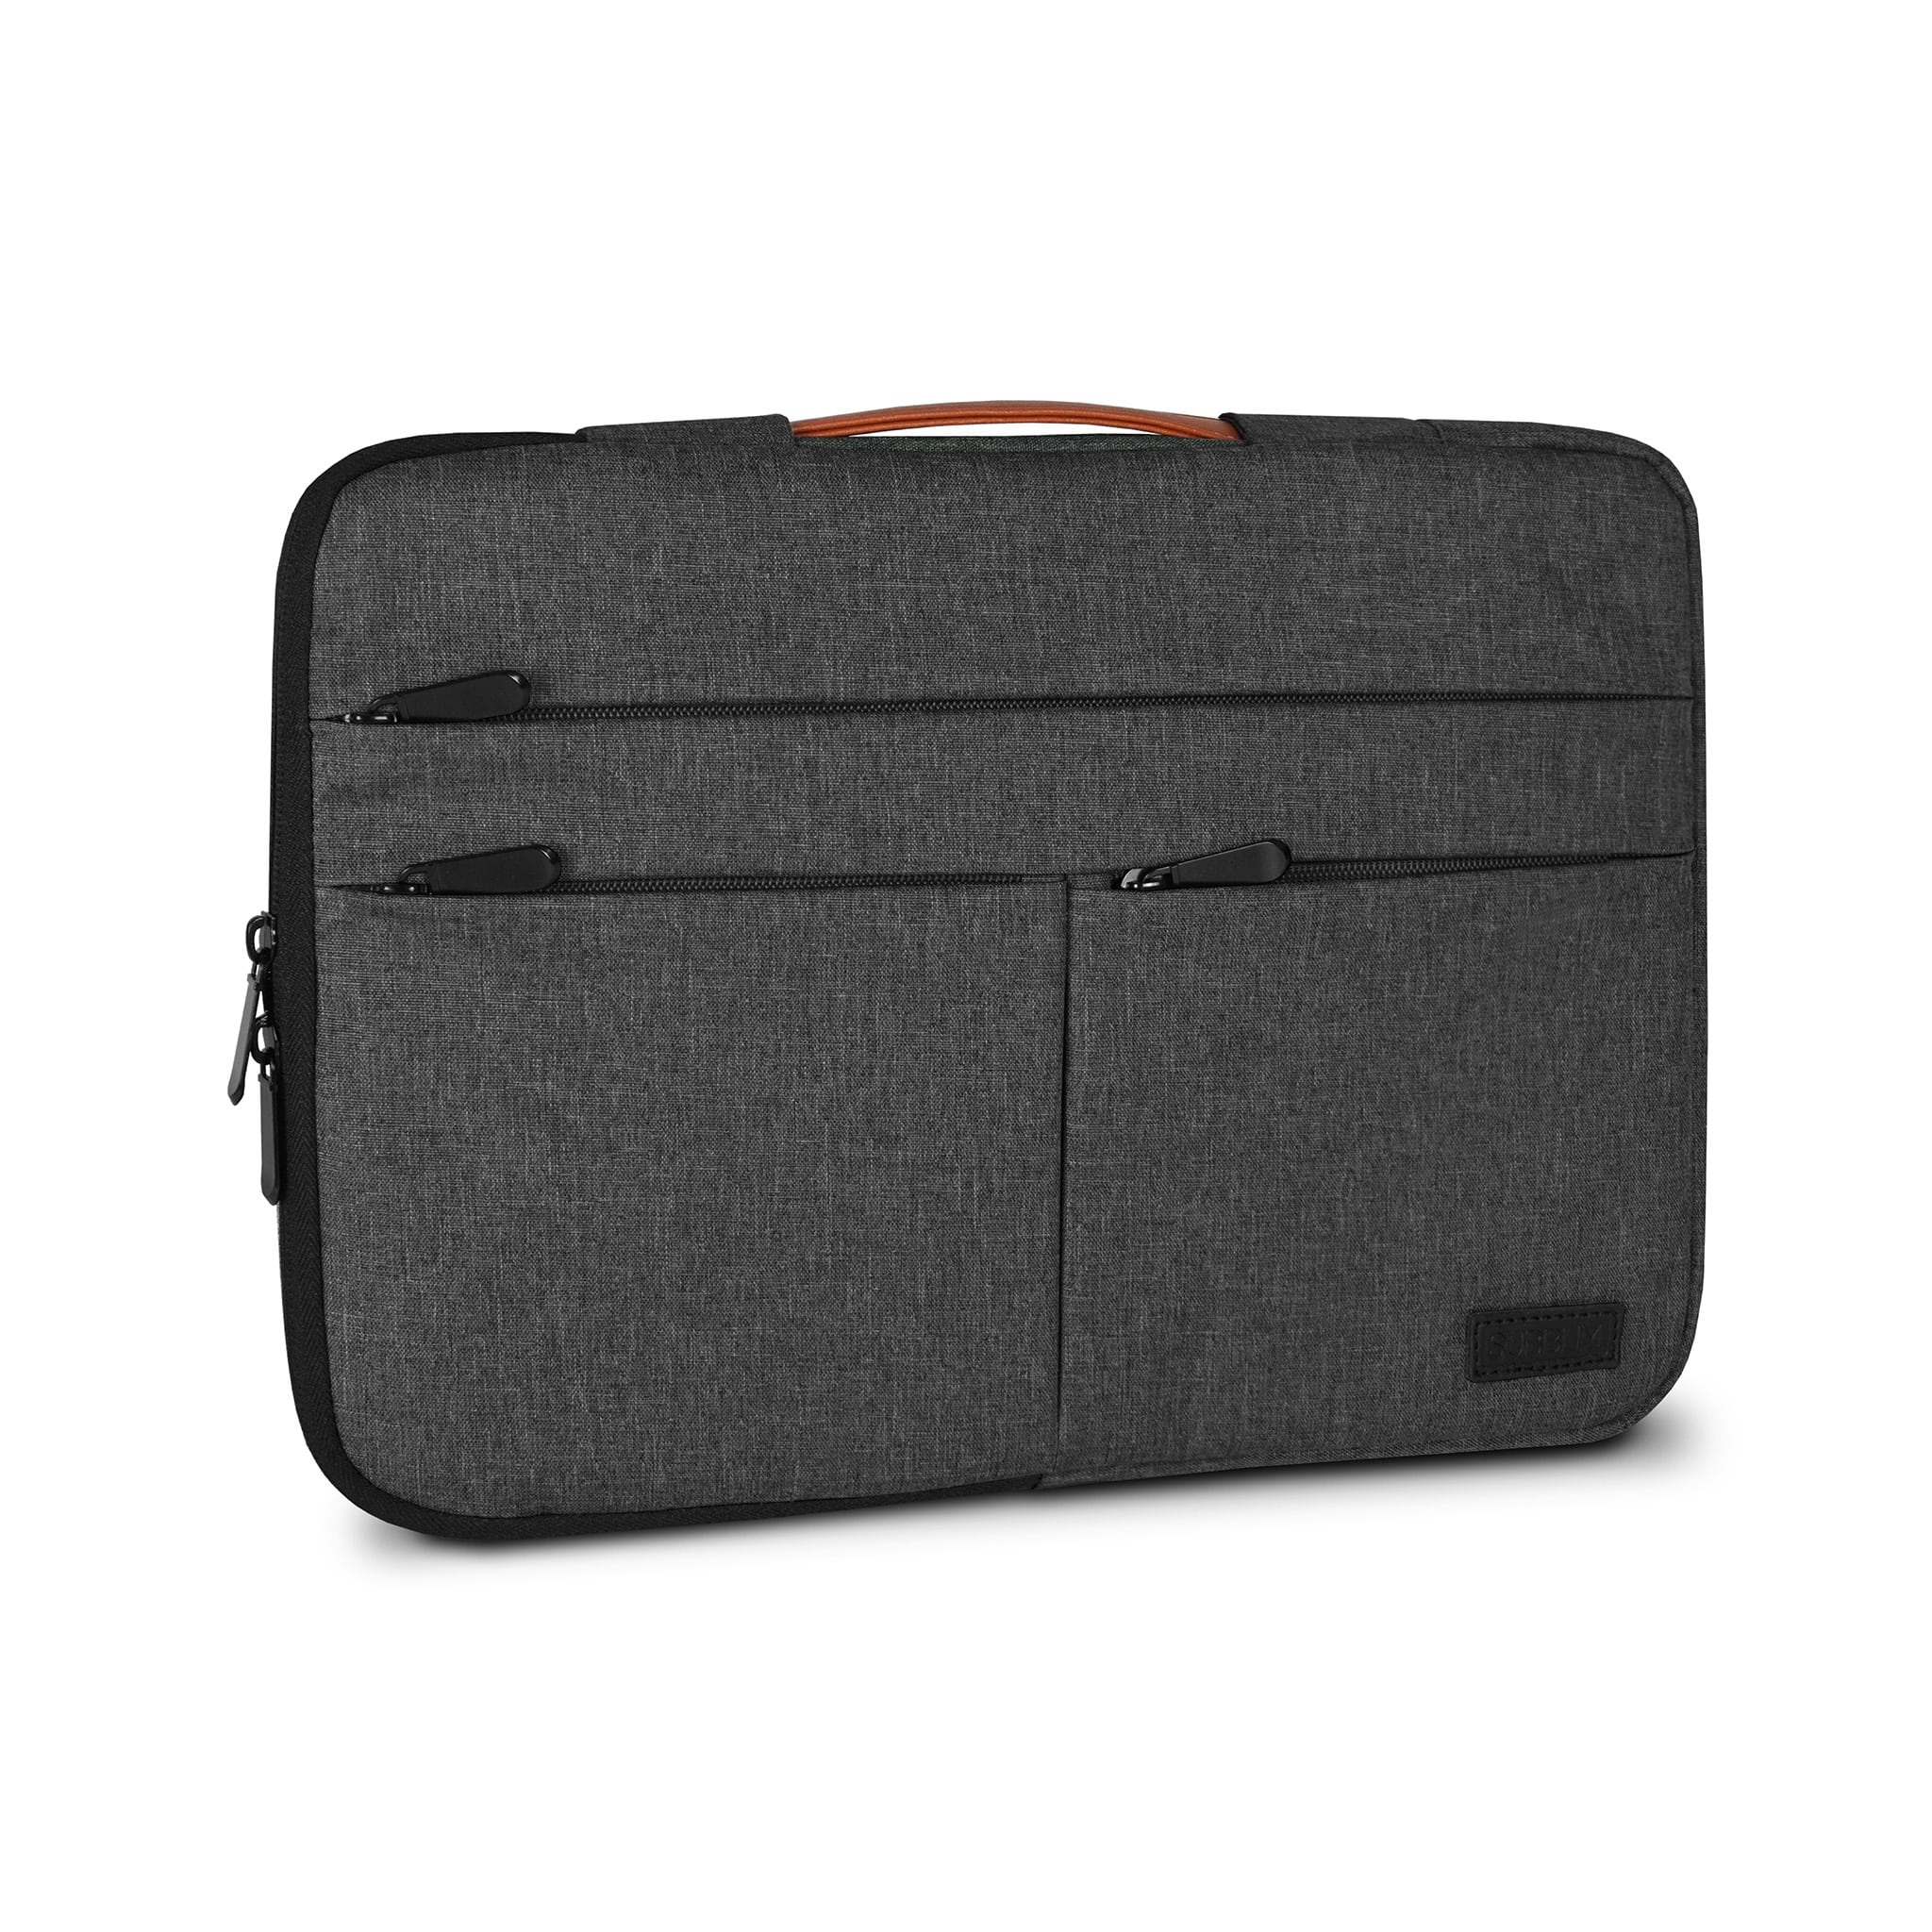 bolsa ordenador portátil de mano protección total en gris oscuro con bolsillos exteriores y asa de transporte